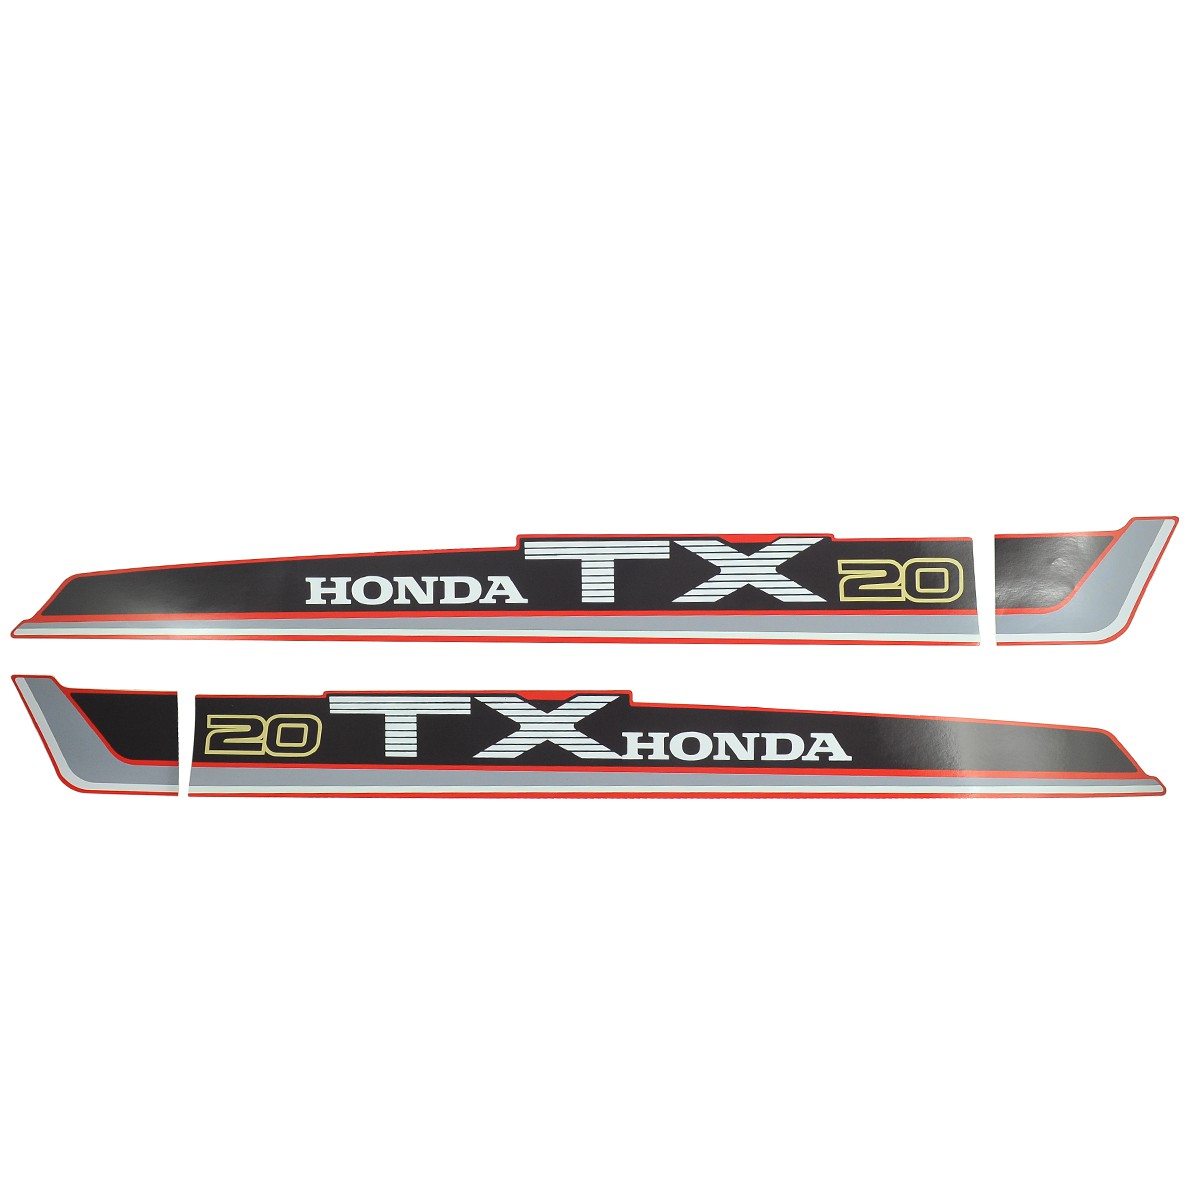 Honda TX20 stickers